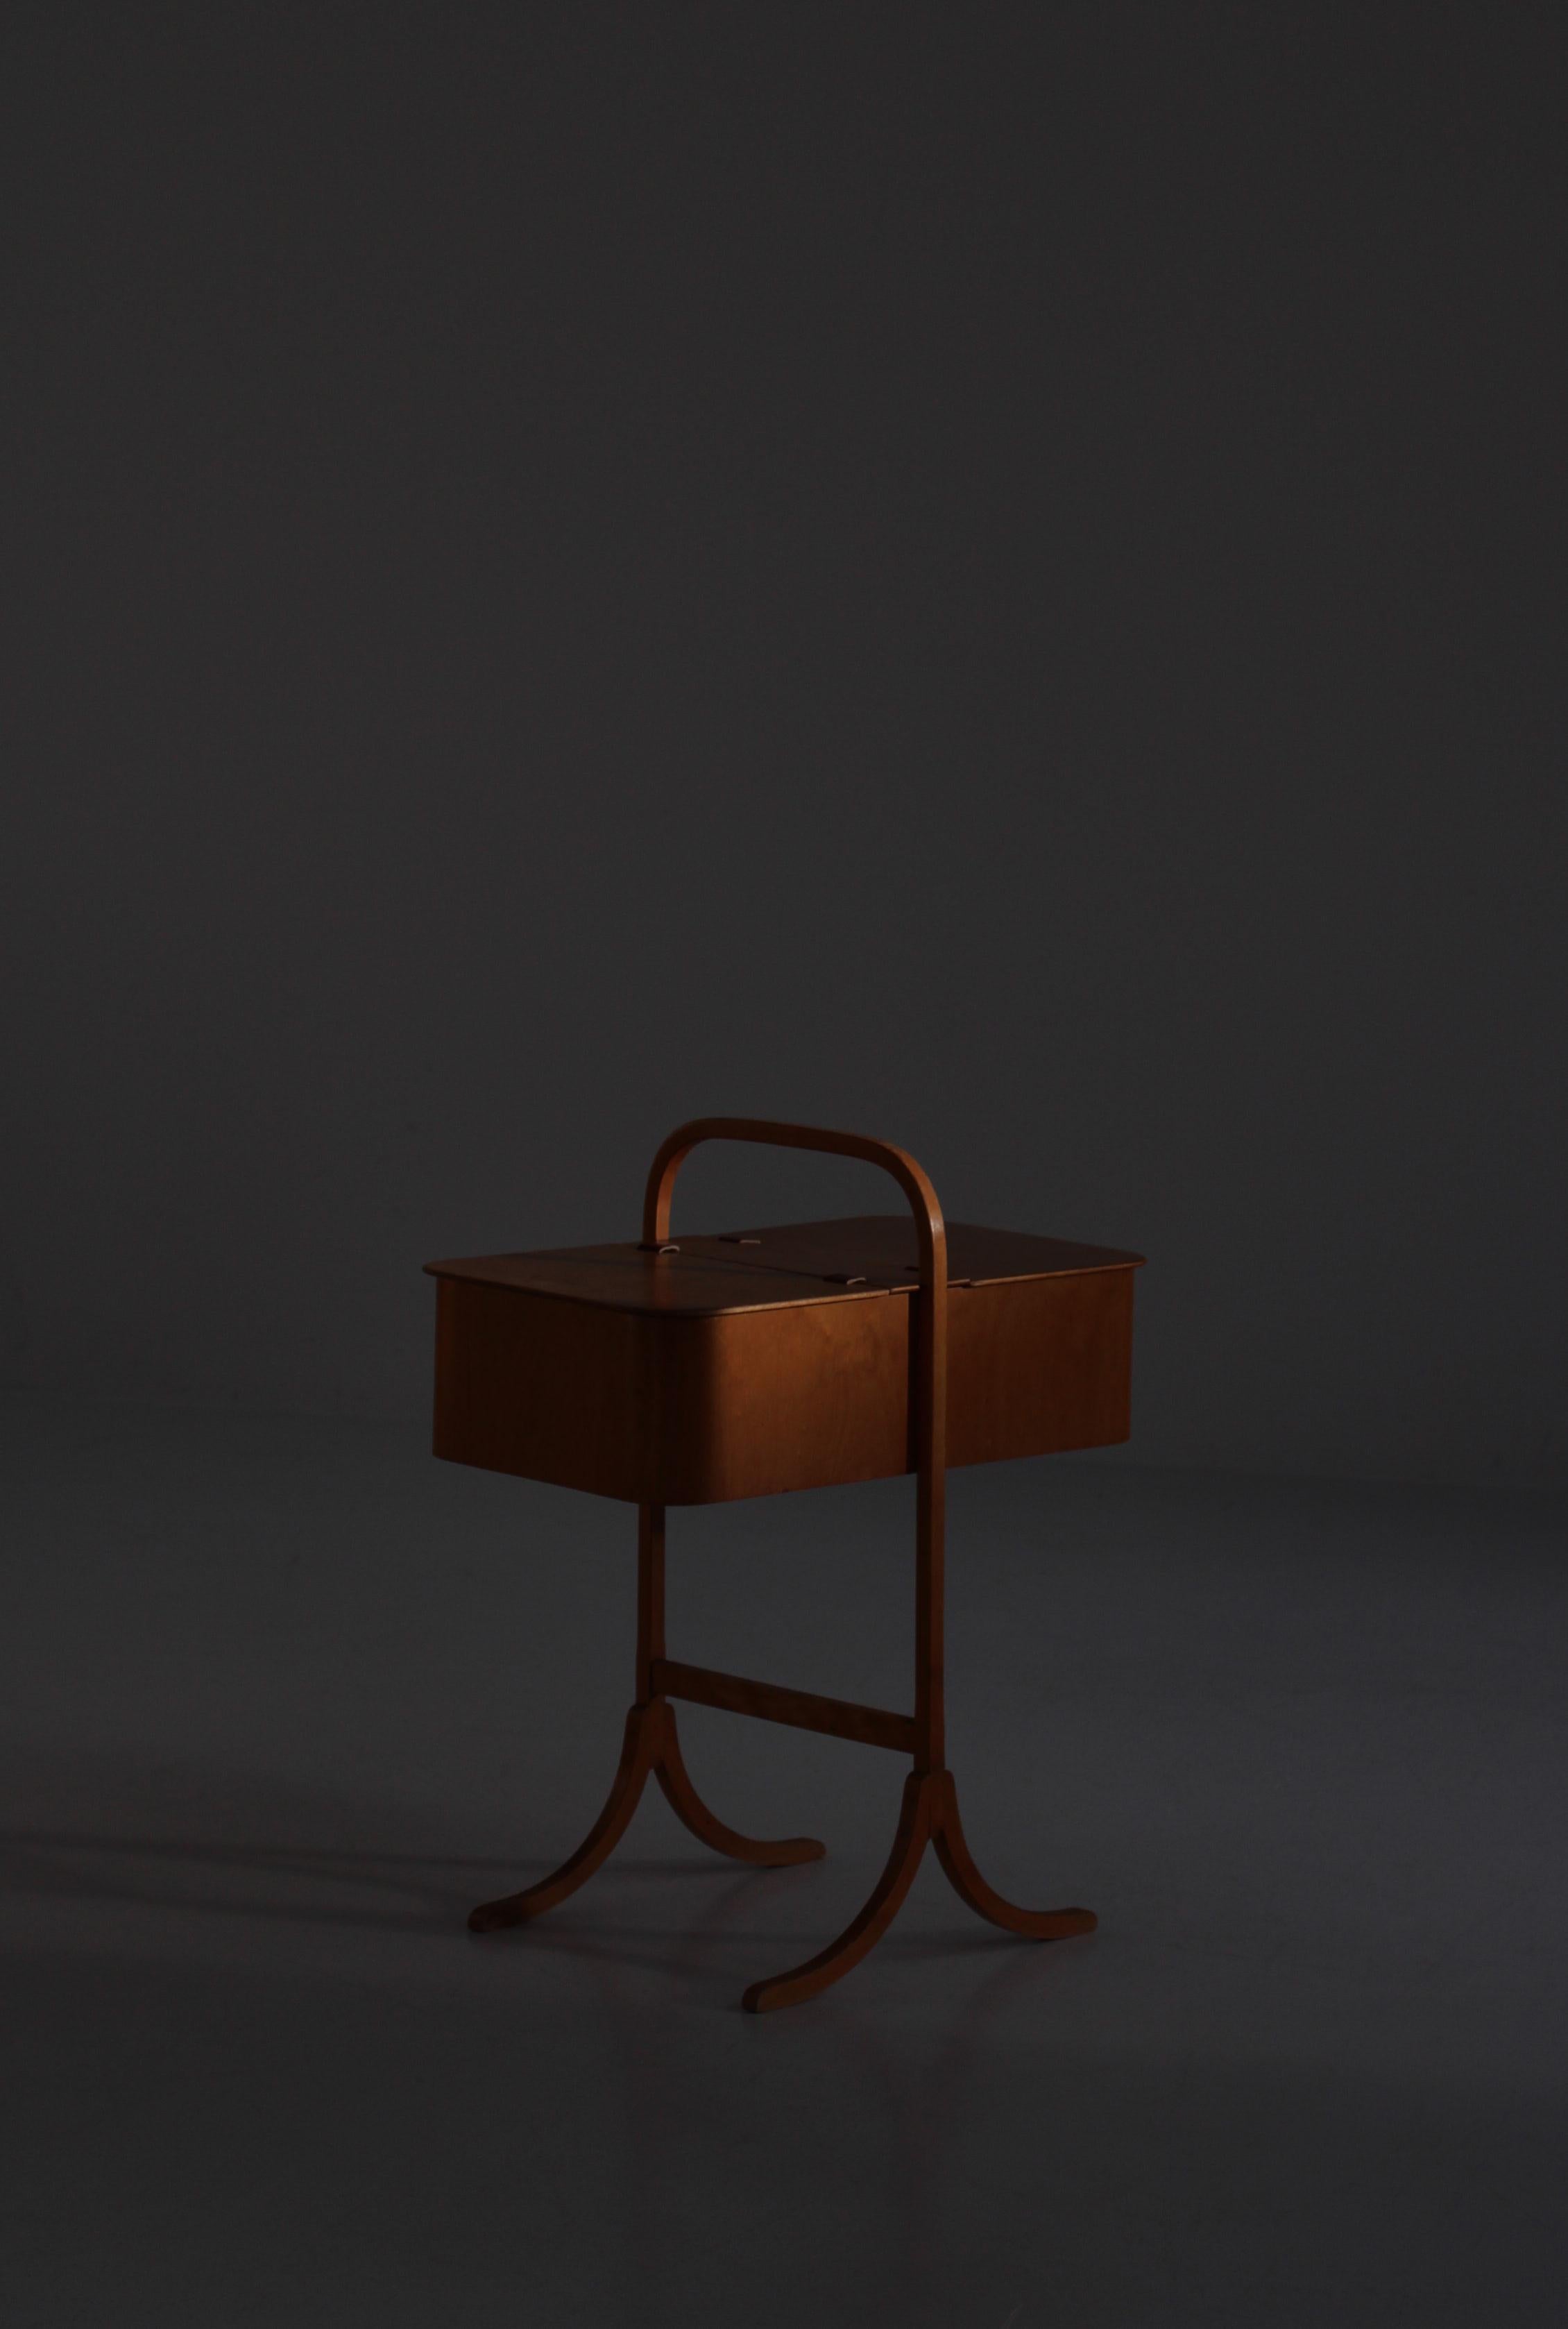 Fritz Hansen Sewing Box in Beechwood and Leather by Søren Hansen, Denmark, 1933 For Sale 8